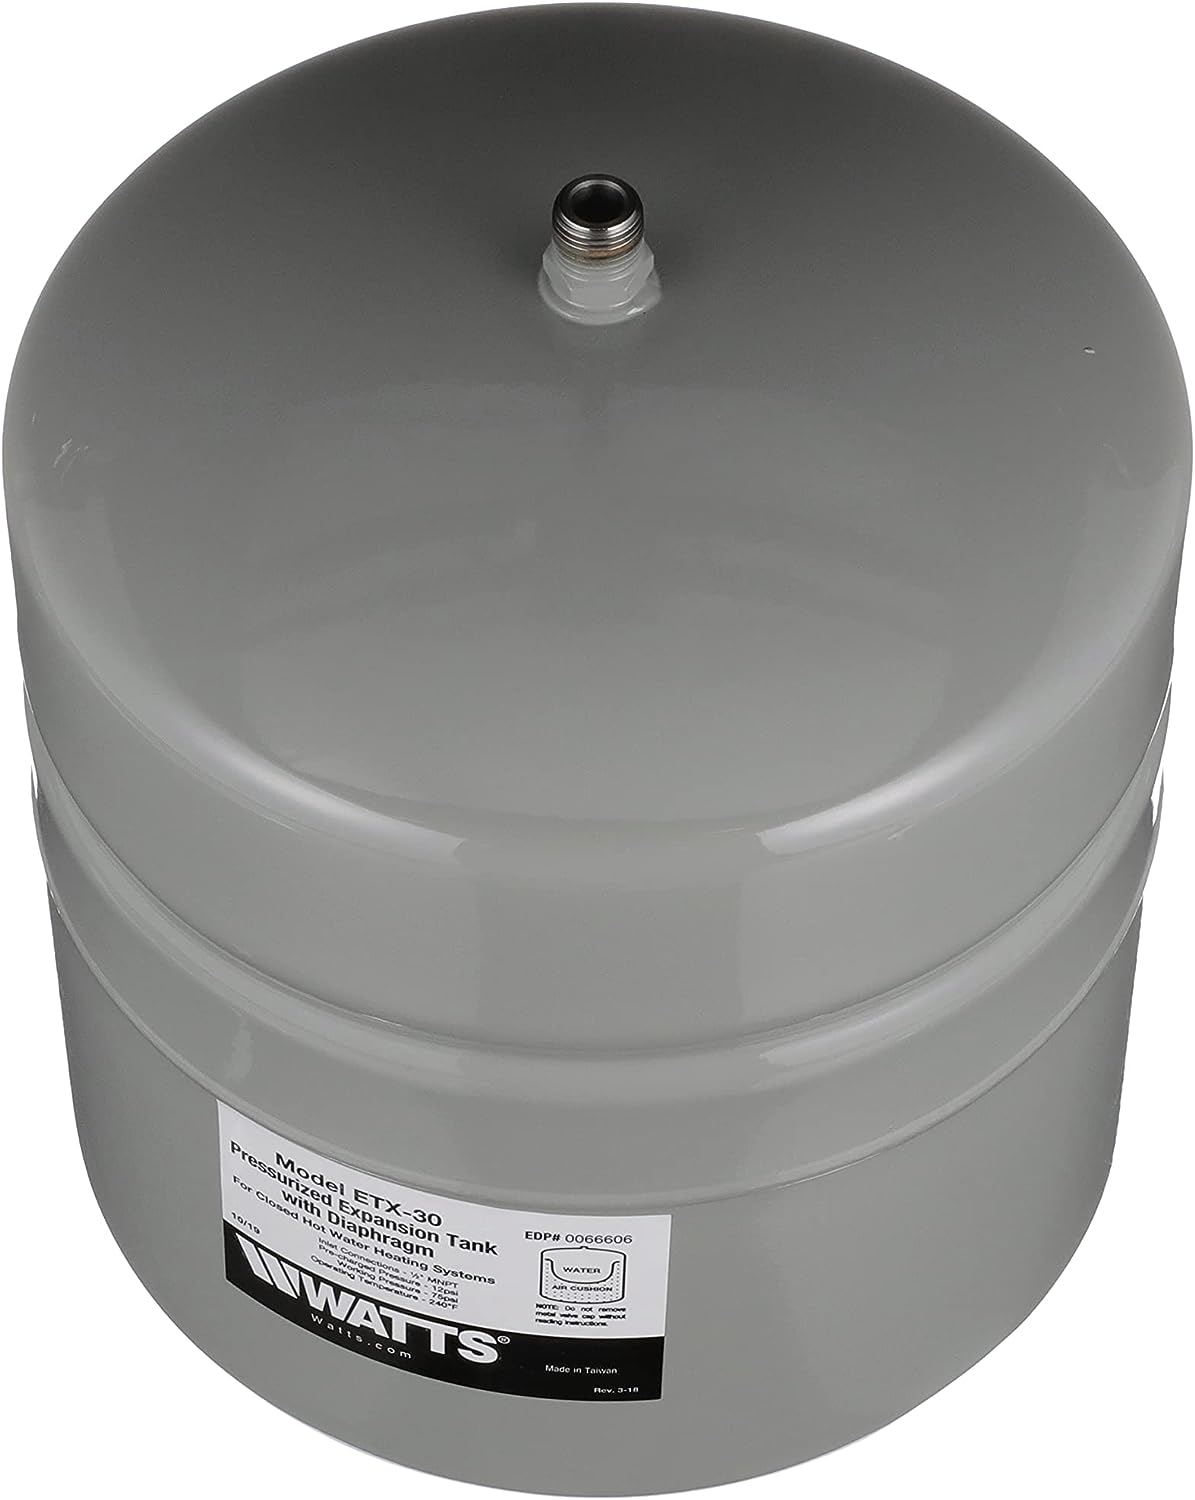 Watts ETX-30 Non-Potable Water Expansion Tank 1/2 in MNPT Connection, 4.5 gallon, Gray